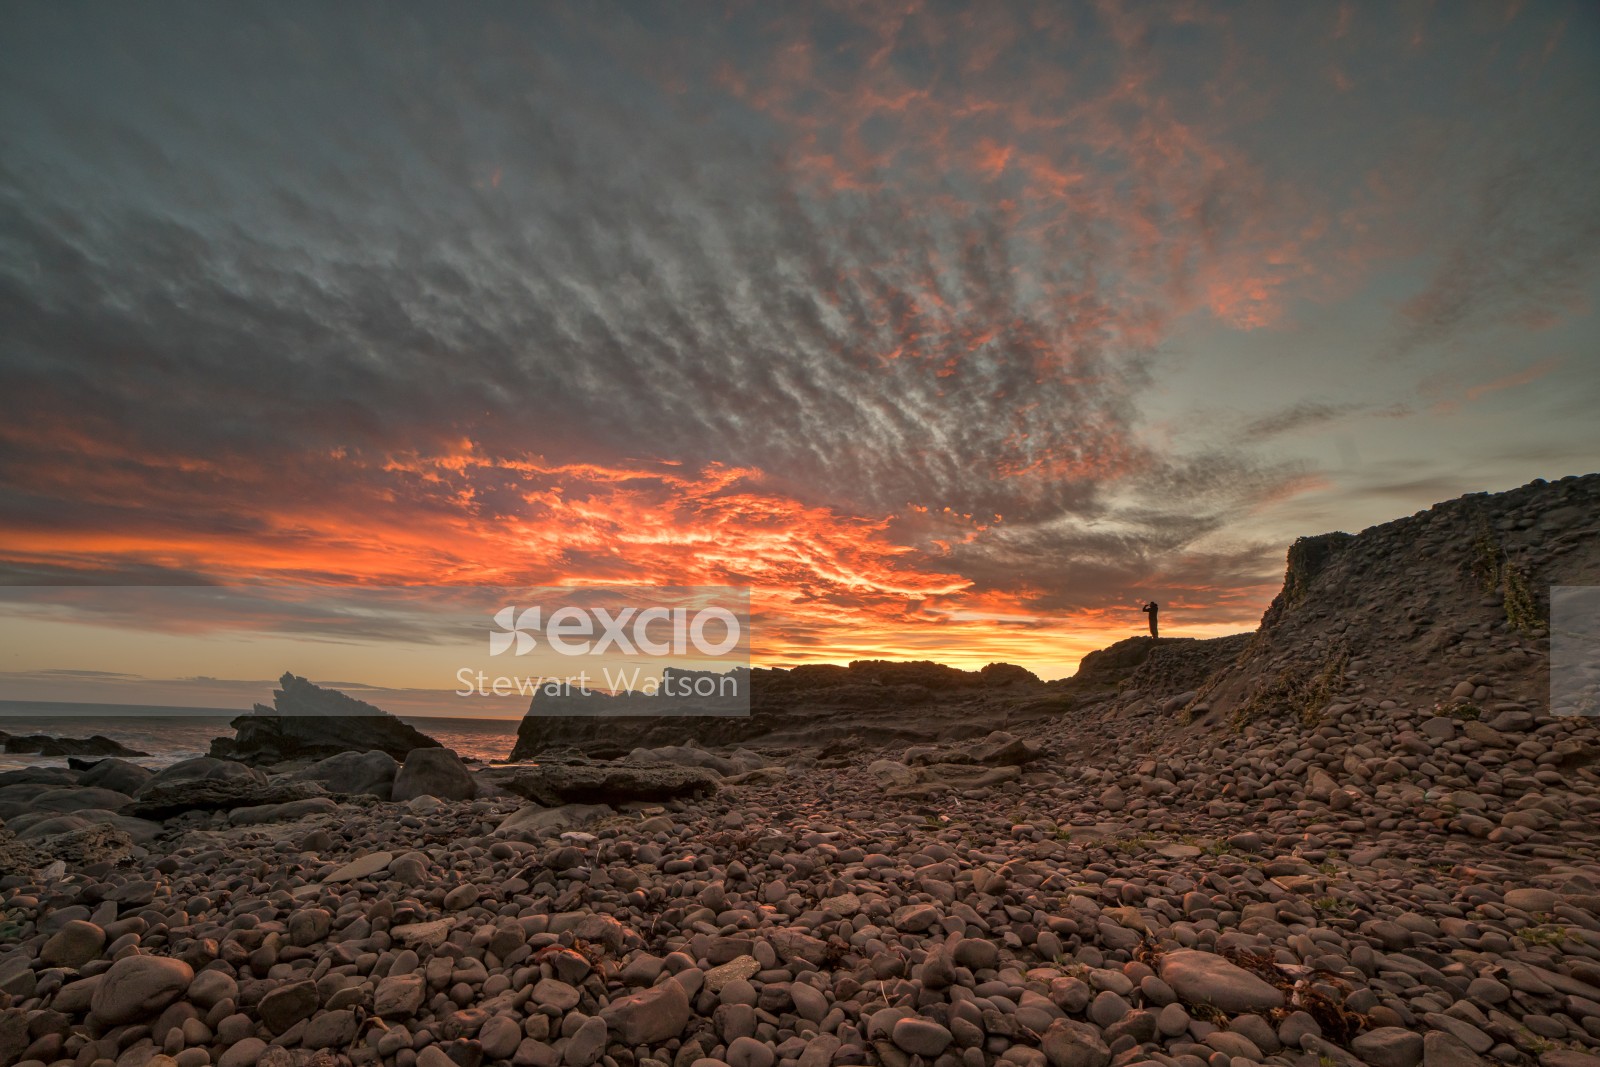 Cape Palliser photographing the sunset